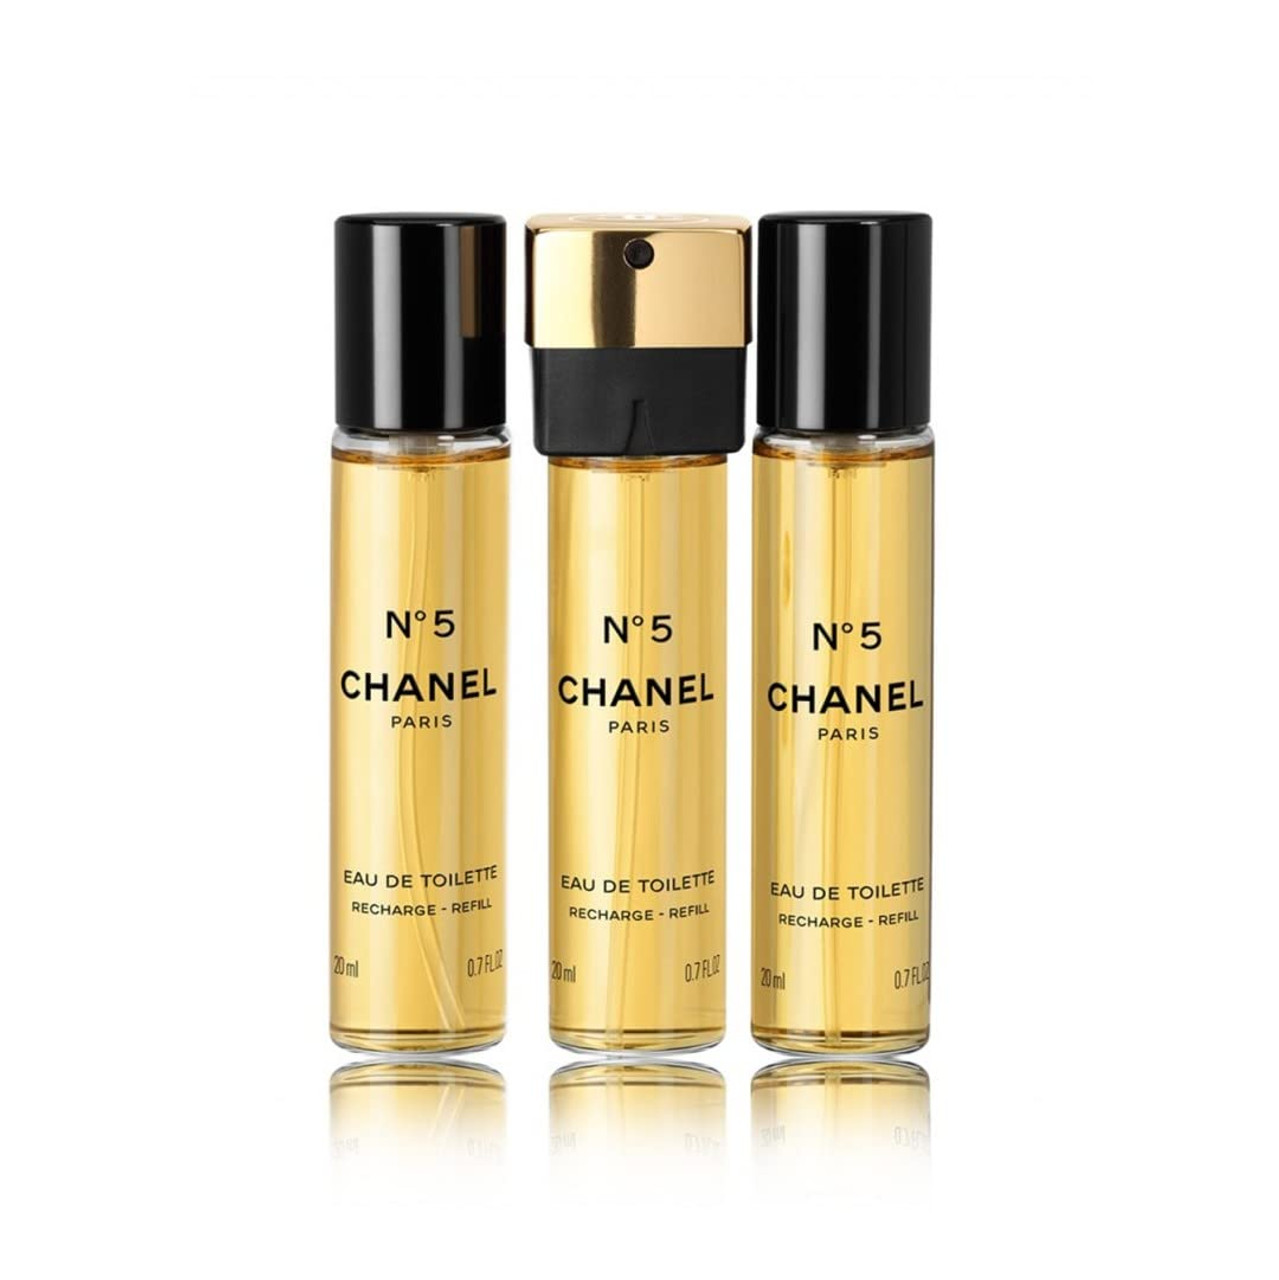 CHANEL (N°5) Chanel No 5 Eau de Parfum Purse Spray (3 x 20 ml) | Harrods SA